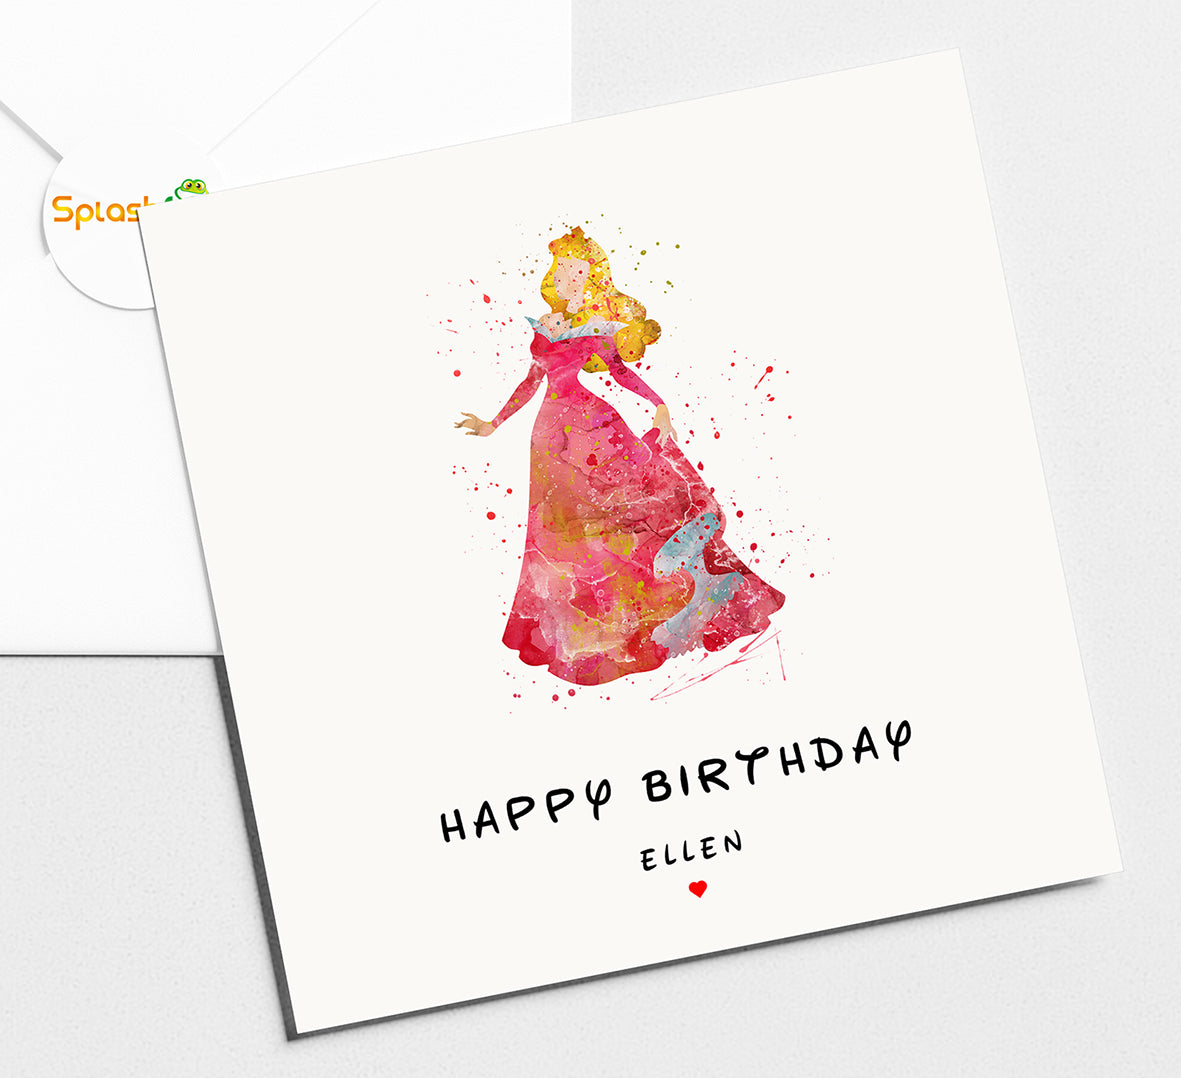 Princess Aurora Birthday Card